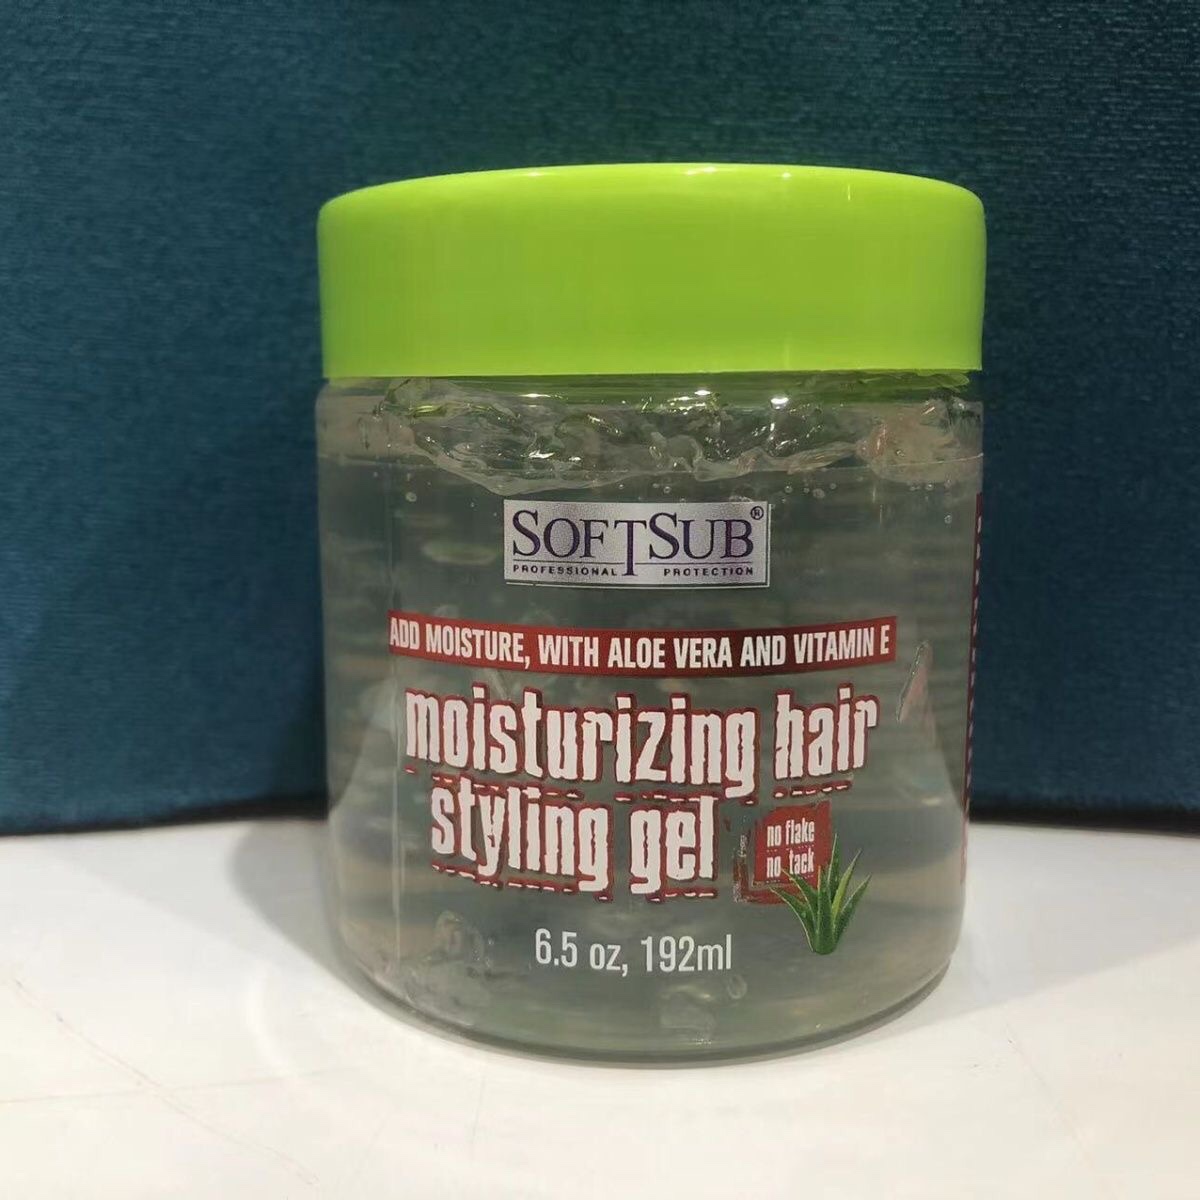 Moisturizing hair styling gel 192ml